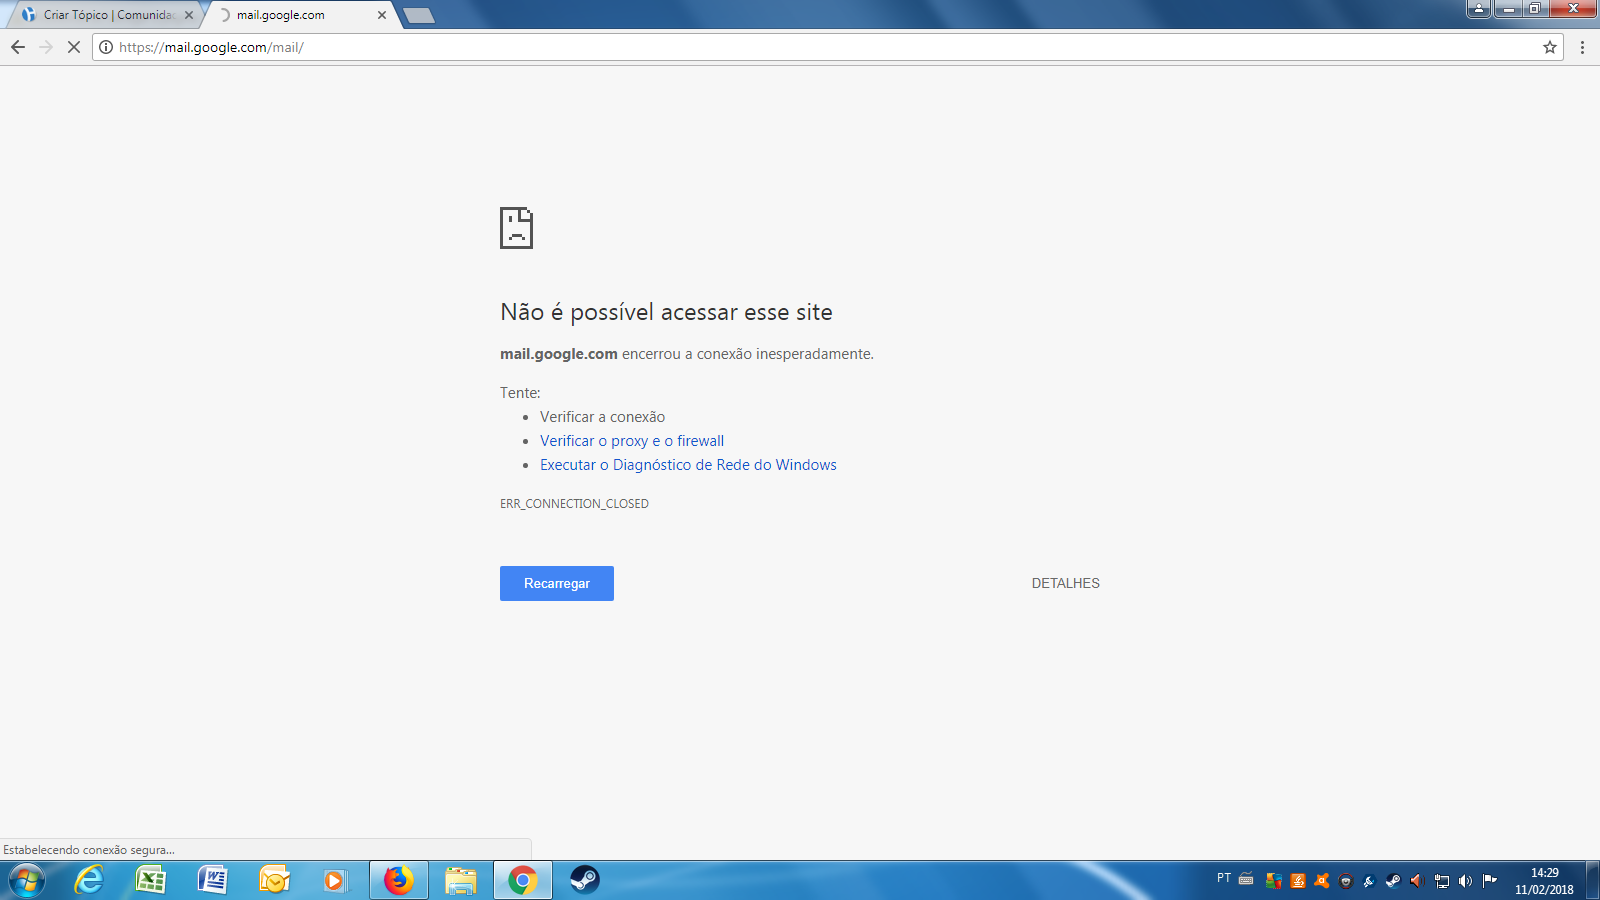 7 Inicio Roblox Avast Secure Browser 2022 07 30 12 07 00 